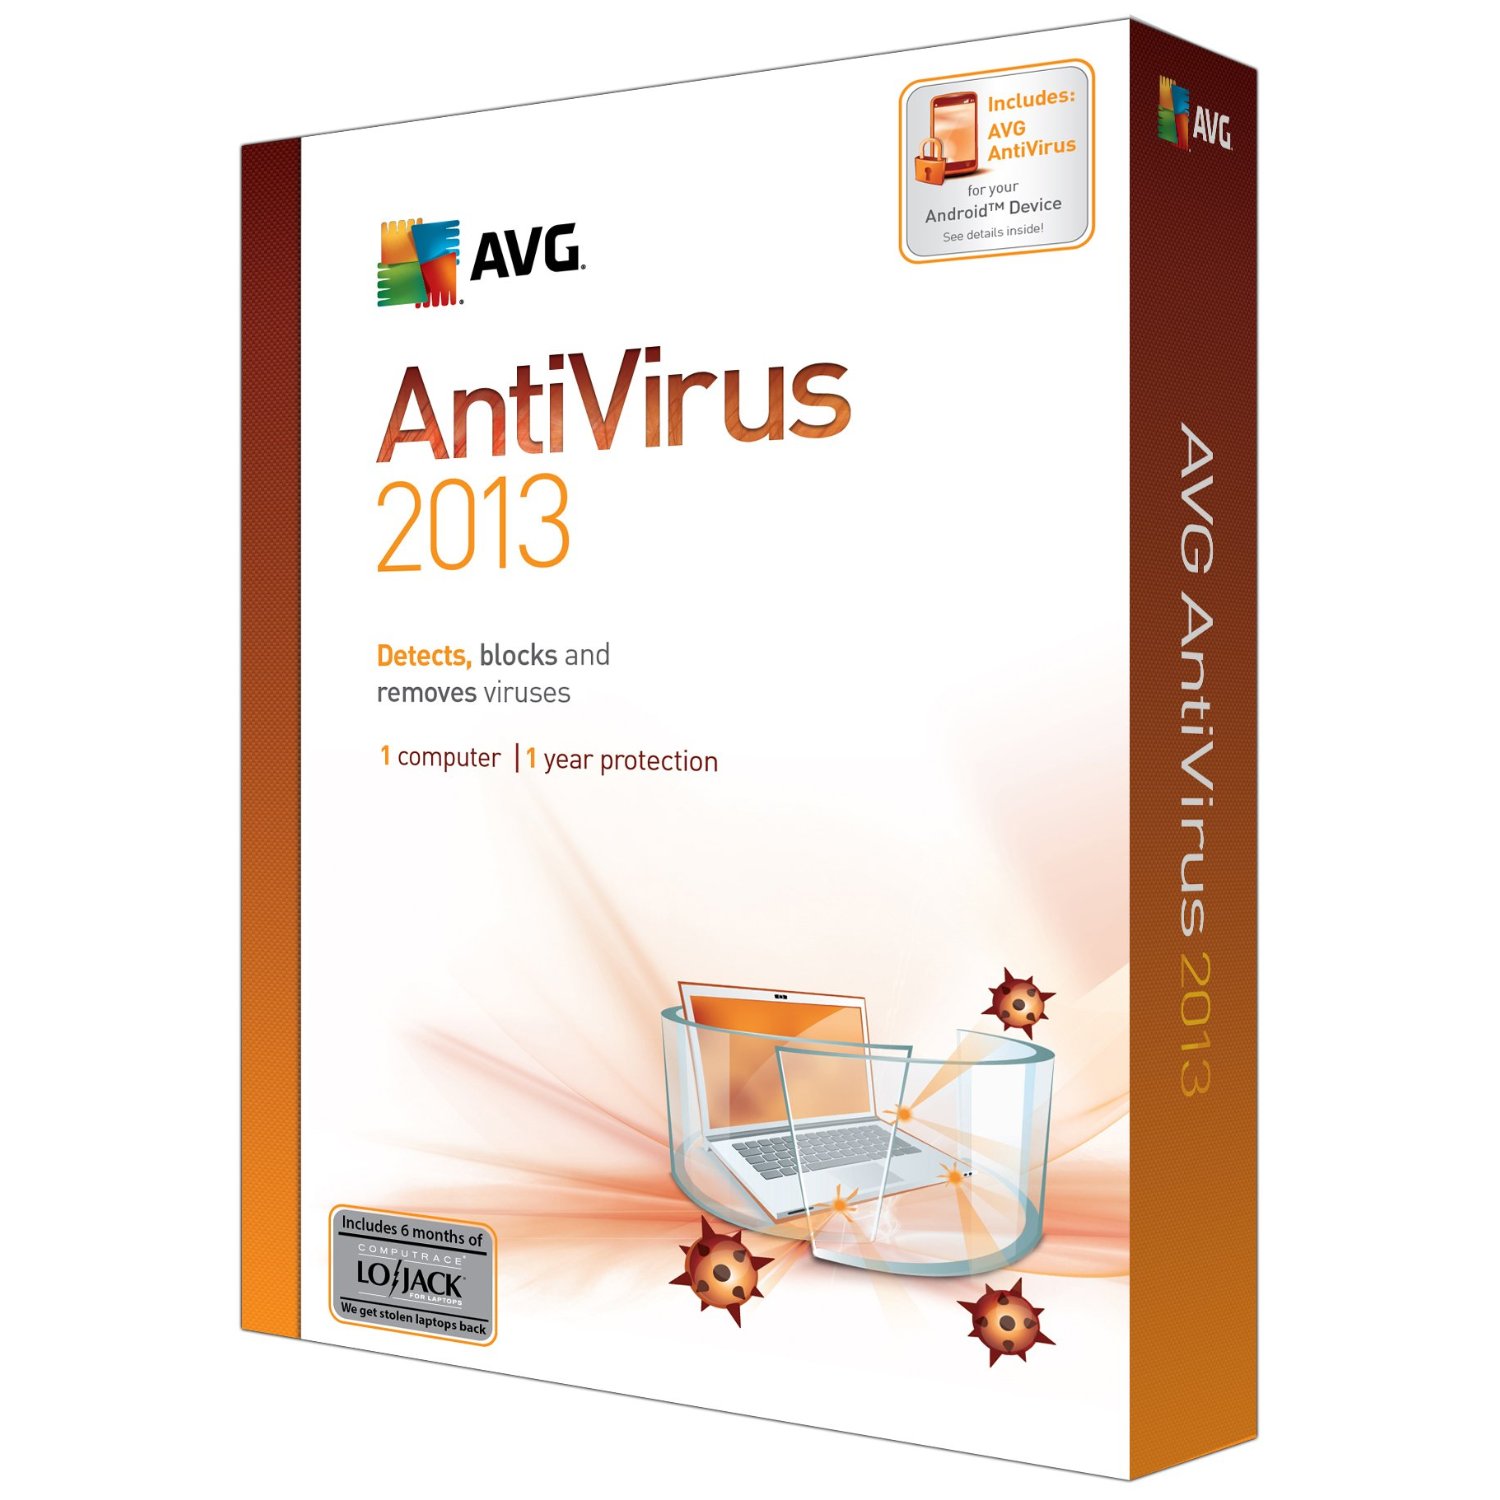 Free Download AVG Antivirus 2013 Application or Games Full ...